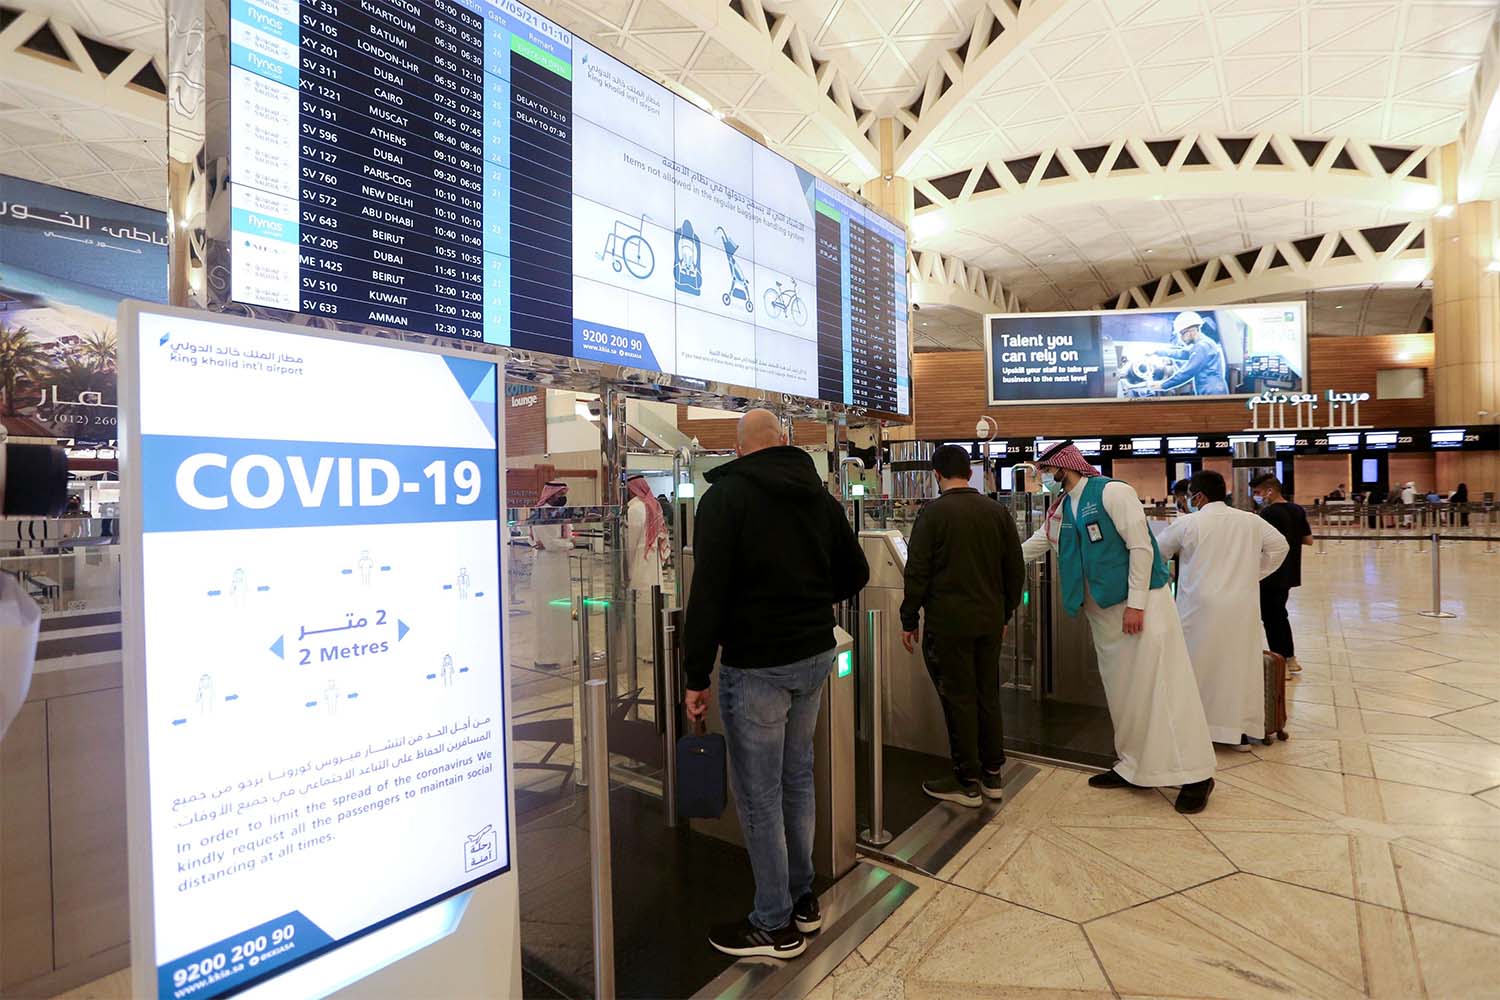 Saudi Arabia toughening travel restrictions